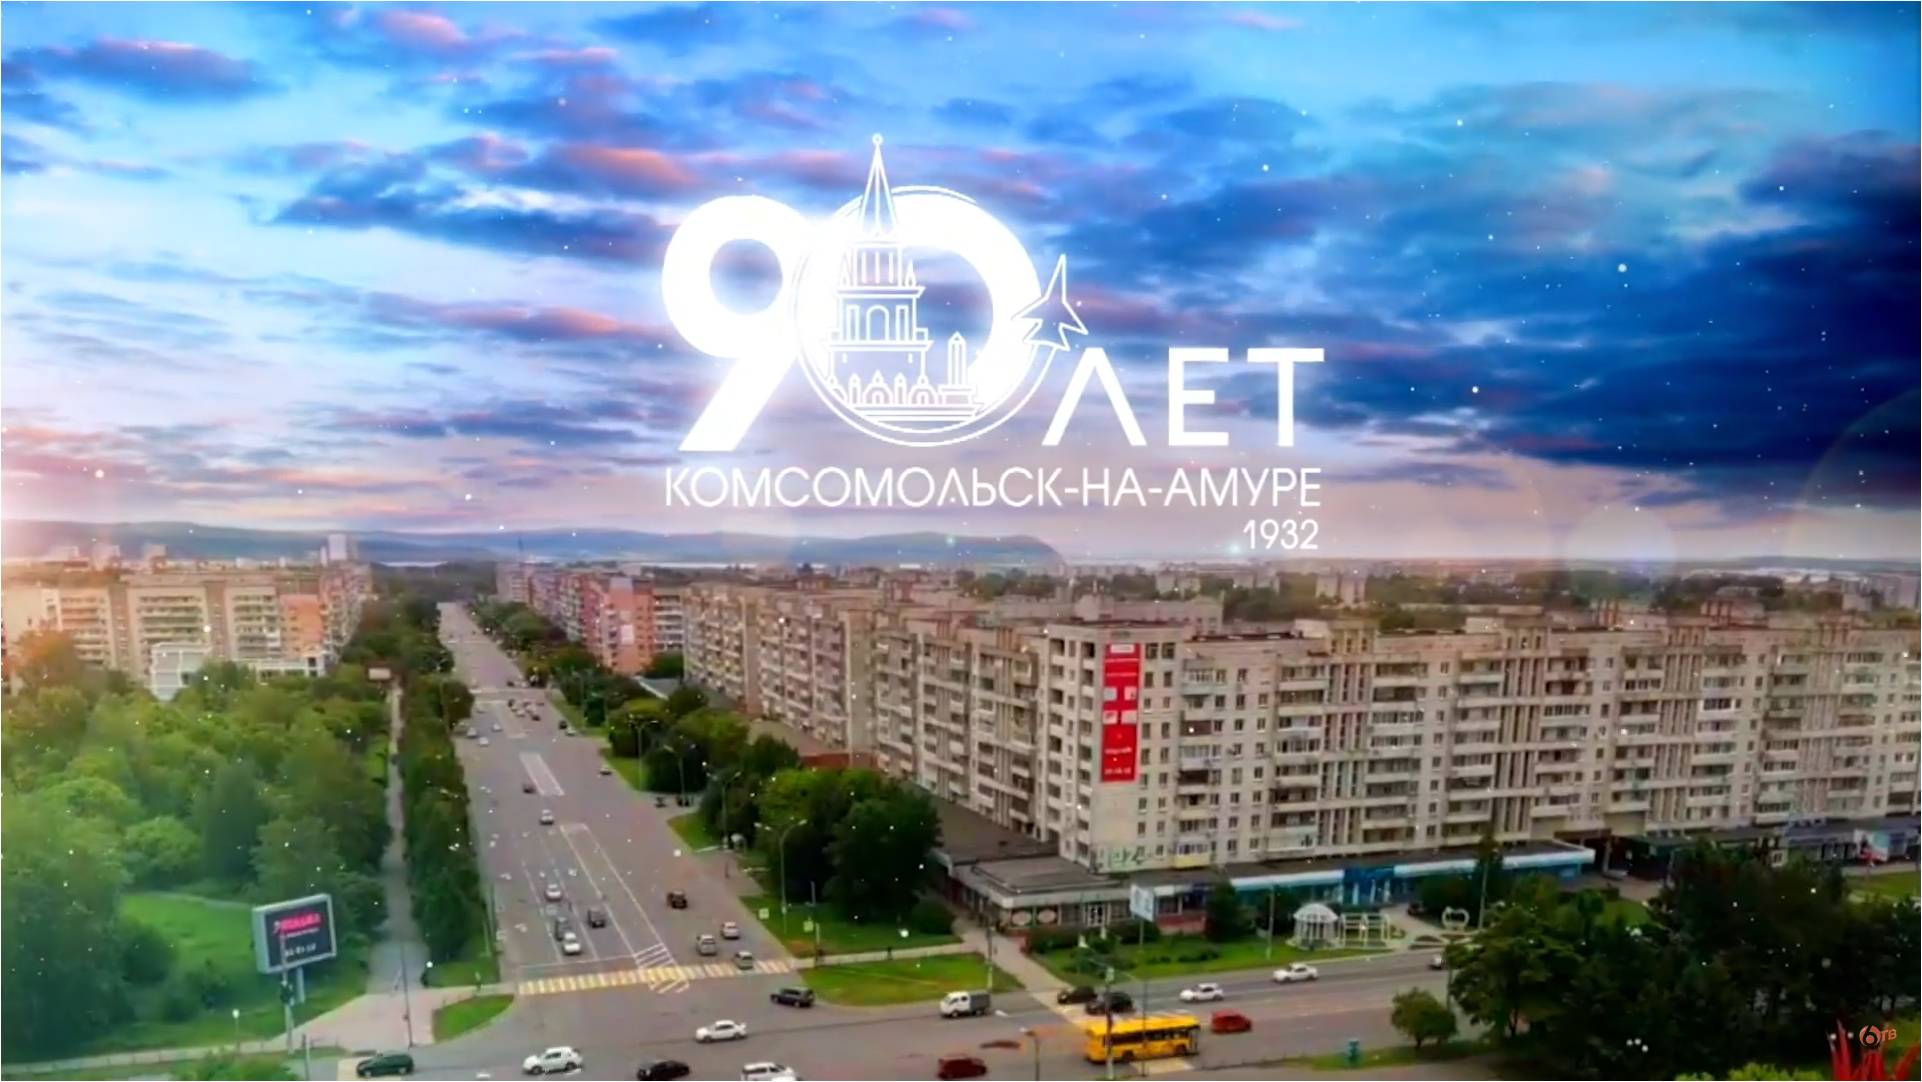 Комсомольск-на-Амуре 90 лет картинки